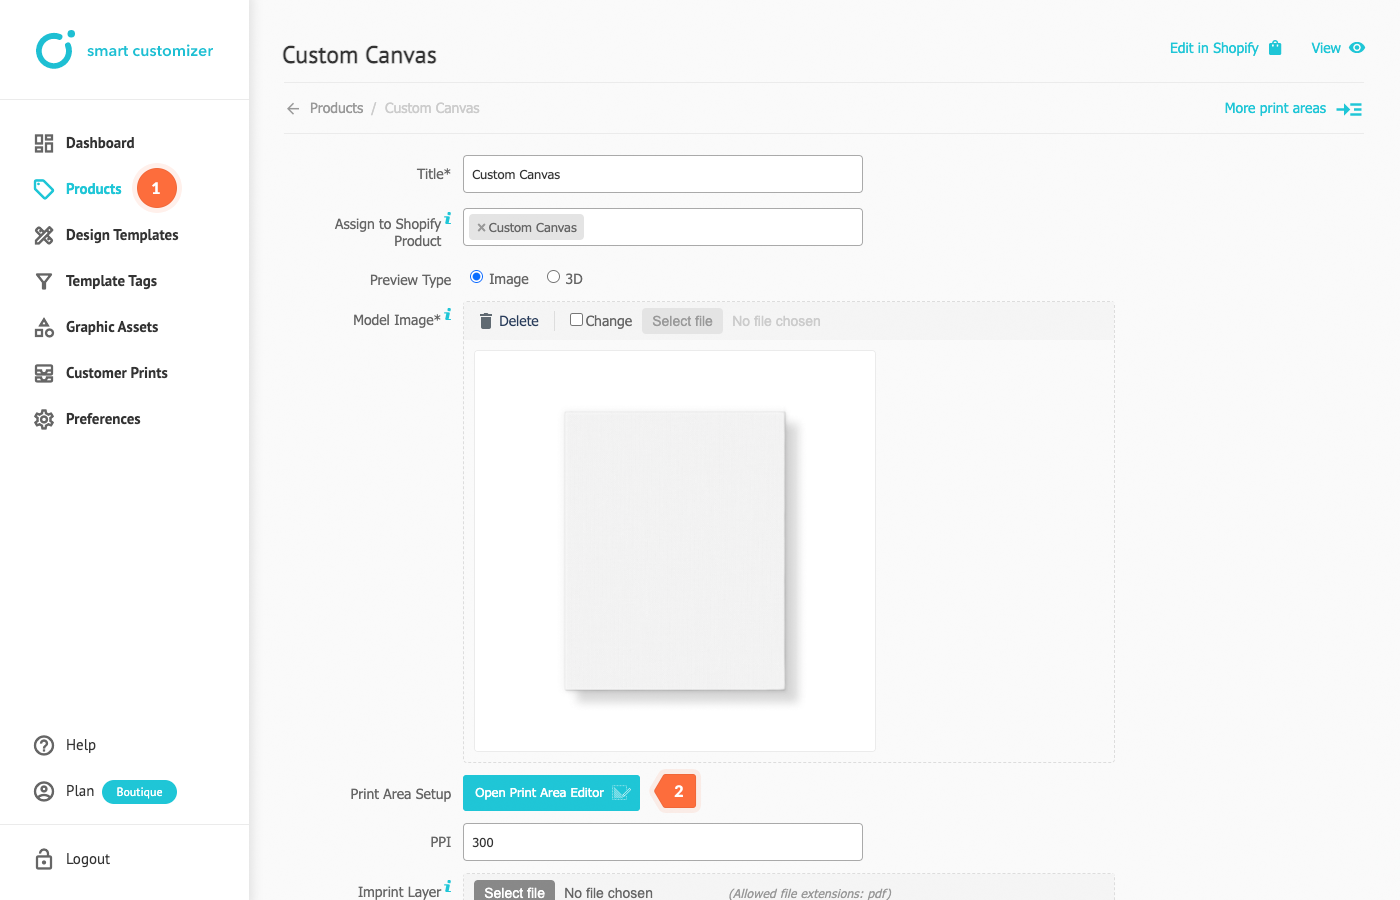 Customizable product setup window in customizer app